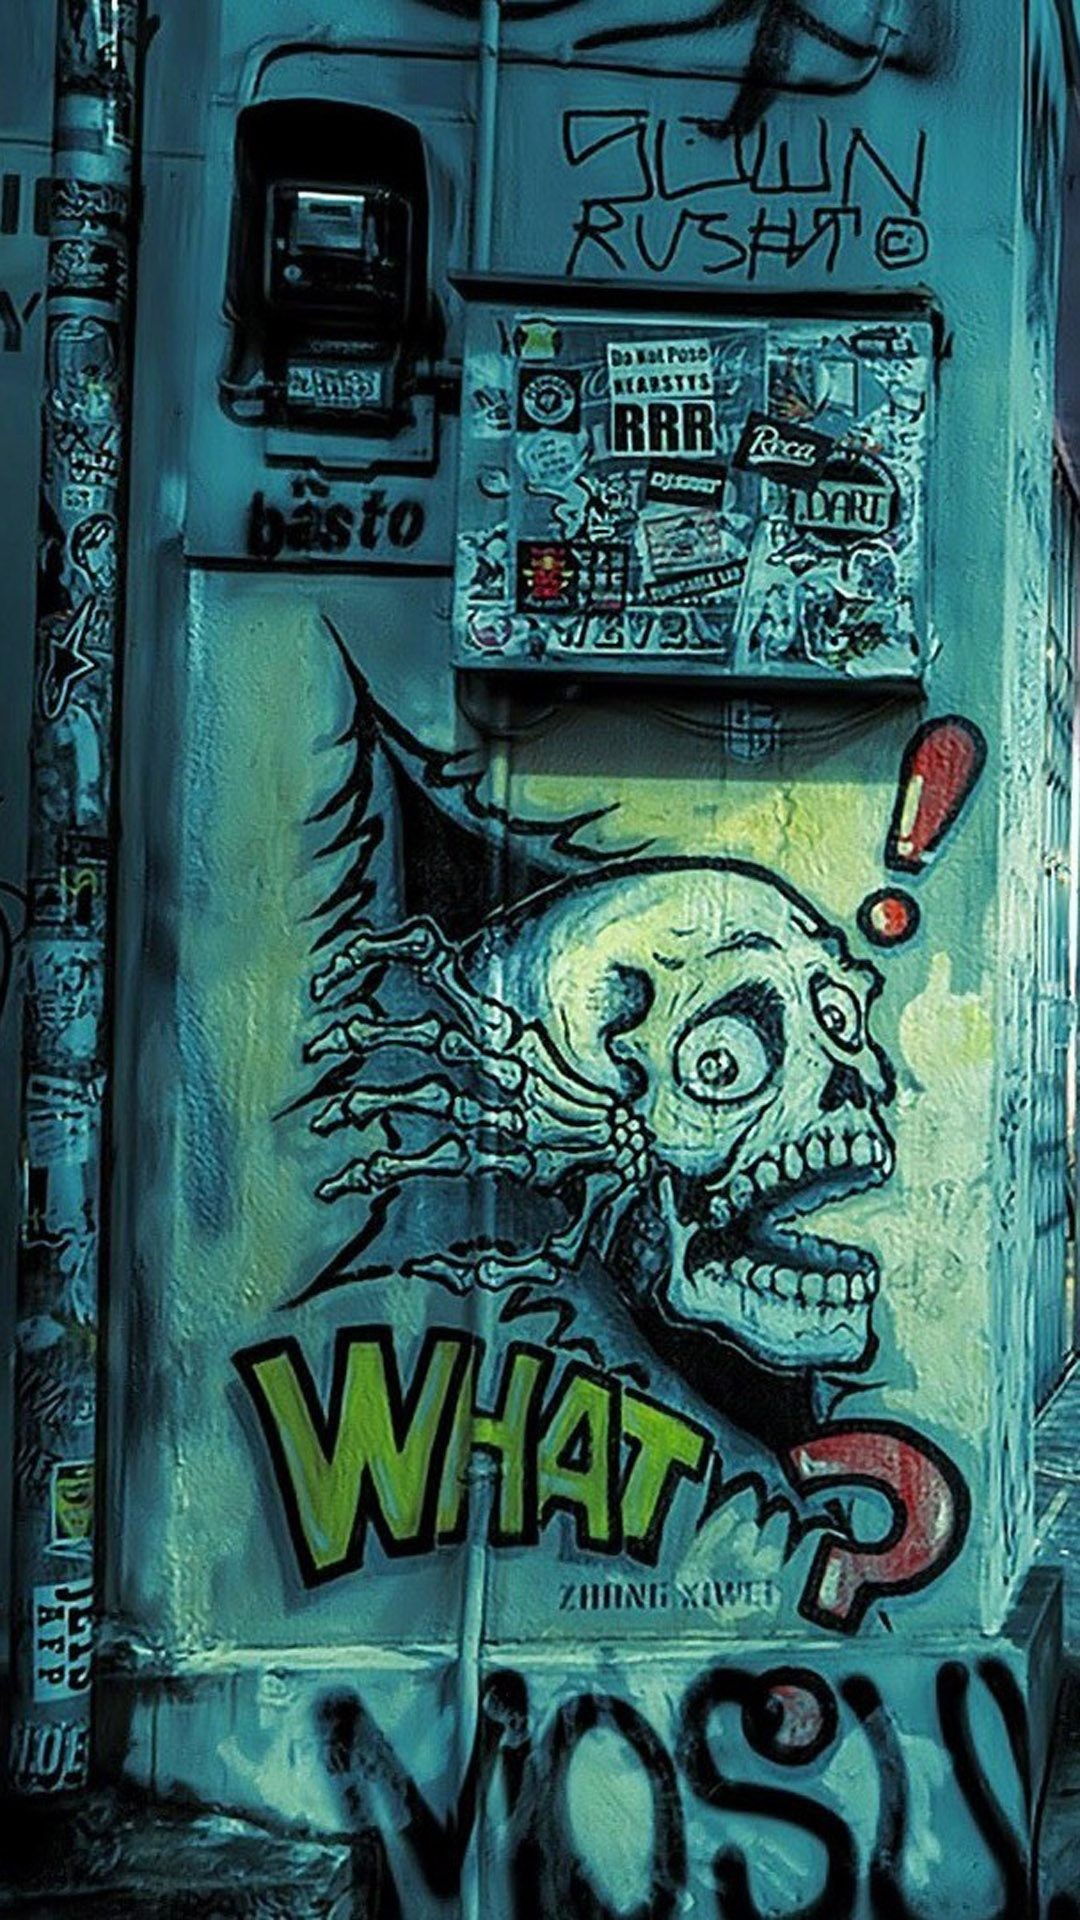 Iphone Graffiti Wallpapers